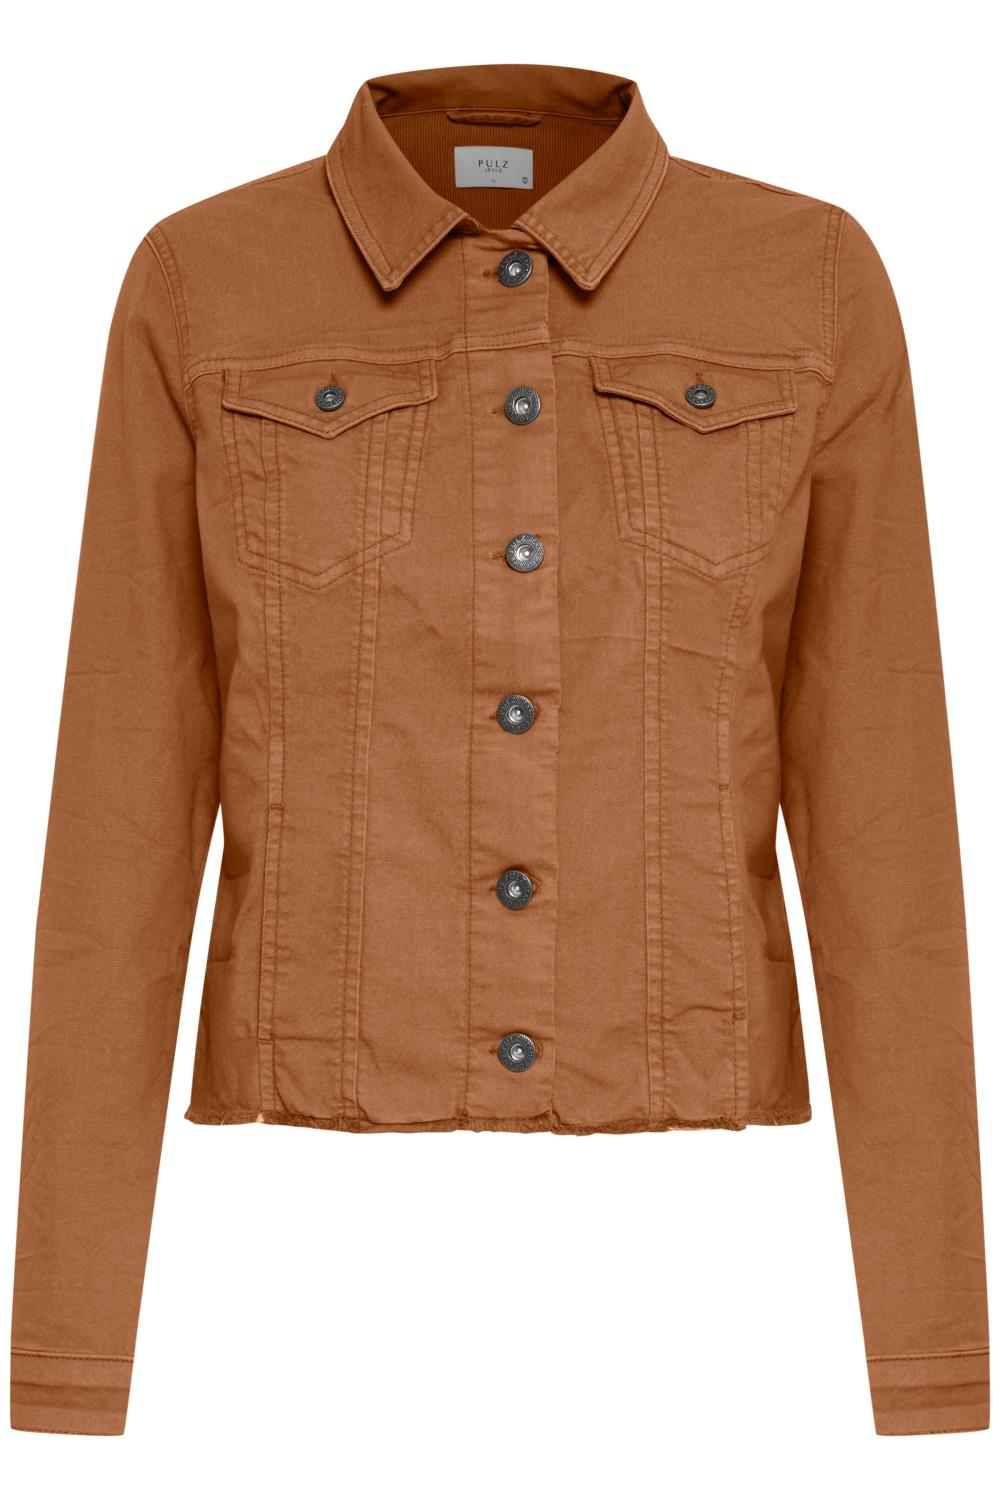 Pulz Suvi Jacket, brun denim jakke